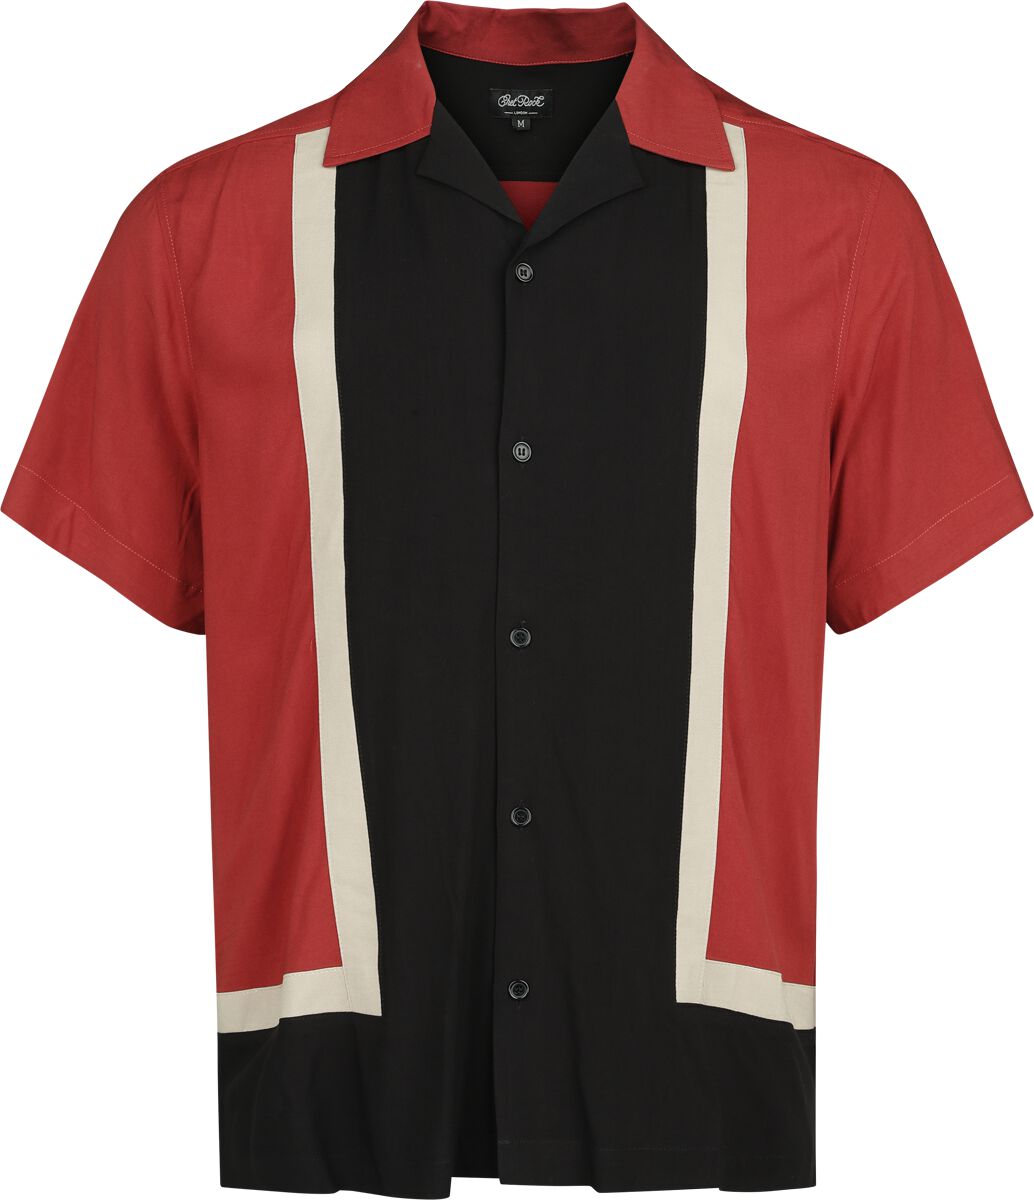 Chet Rock Walter Bowling Shirt Kurzarmhemd rot schwarz in XL